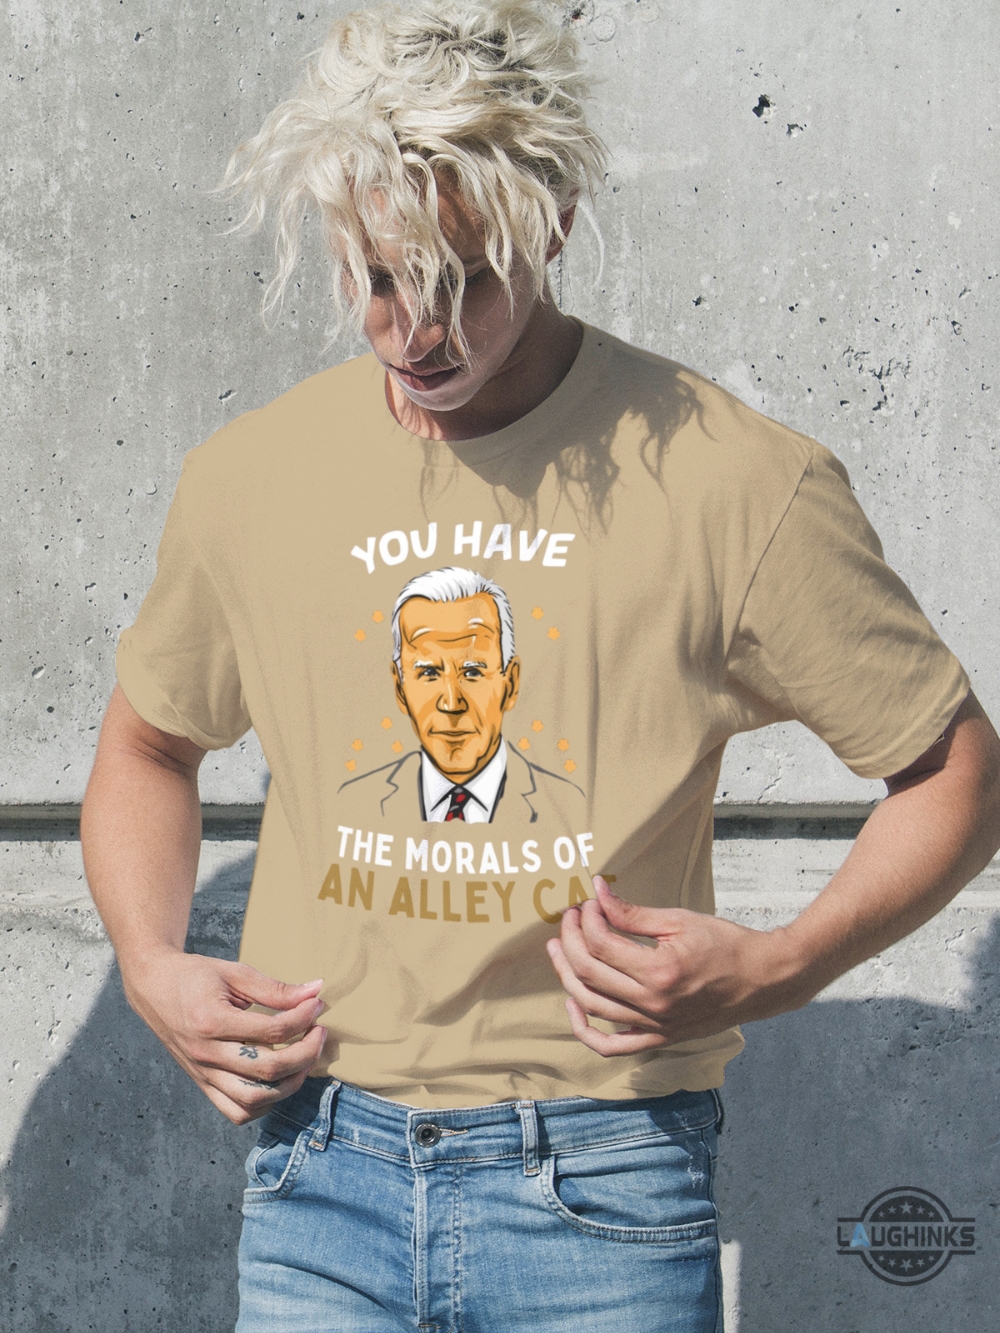 Joe Biden Morals Of An Alley Cat T Shirt Sweatshirt Hoodie Funny Presidential Debate Donald Trump Memes Gifs Shirts